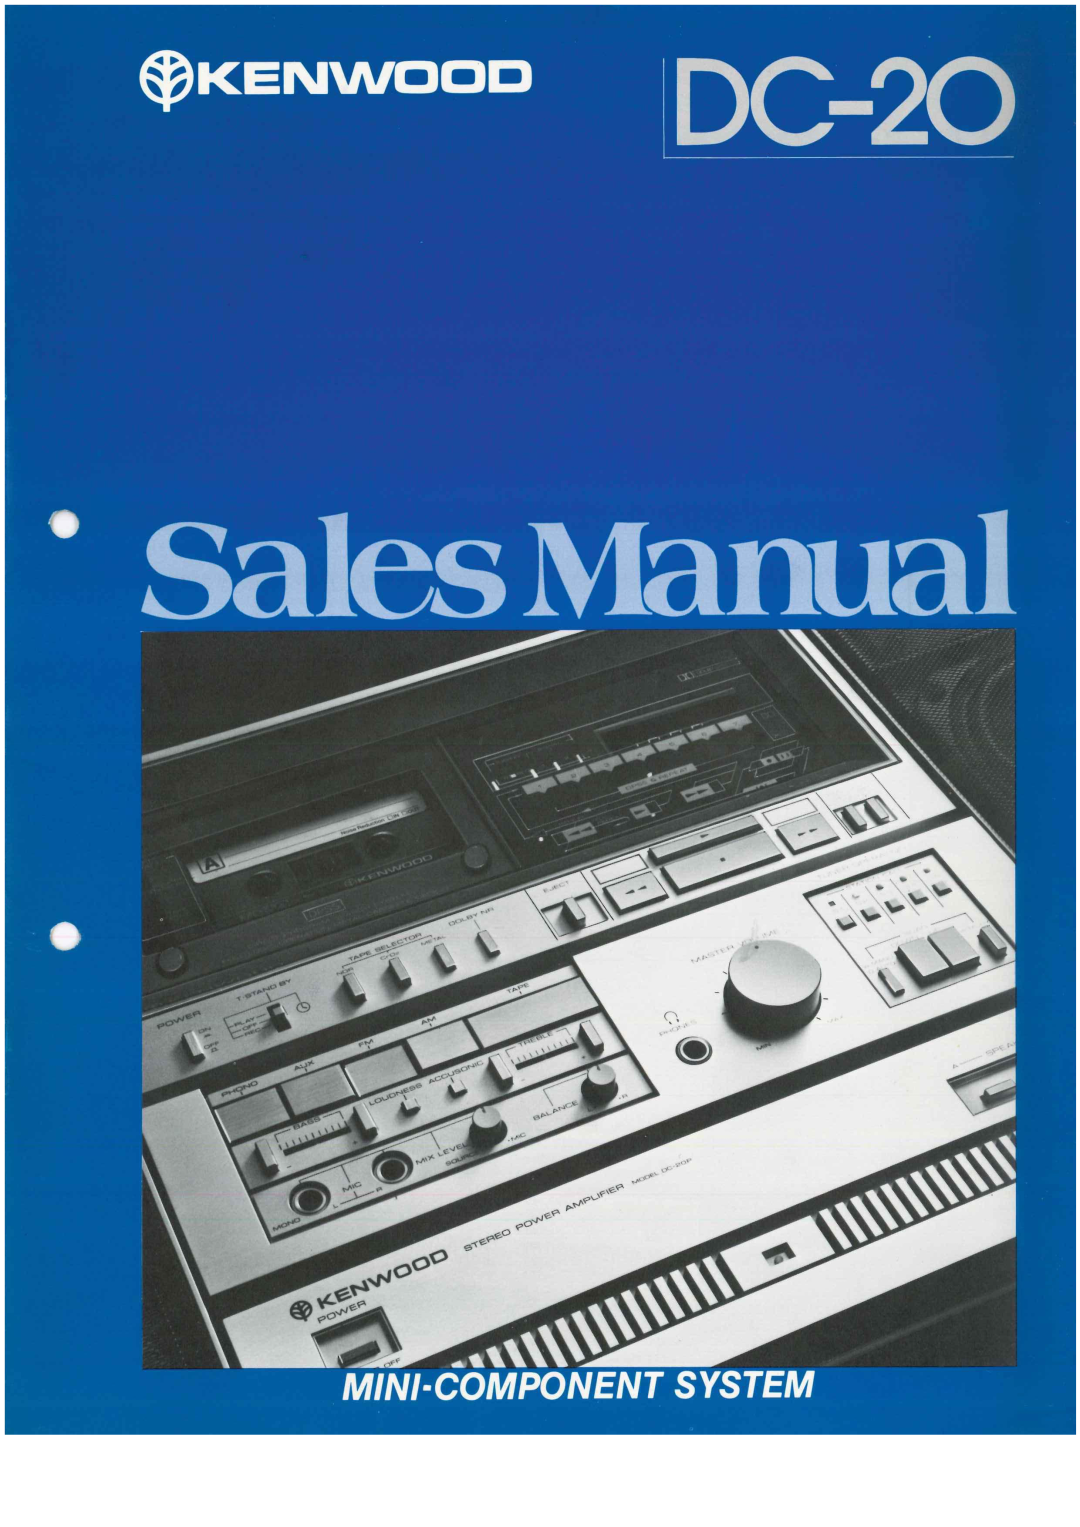 Kenwood DC-20 manual Sales Manual 